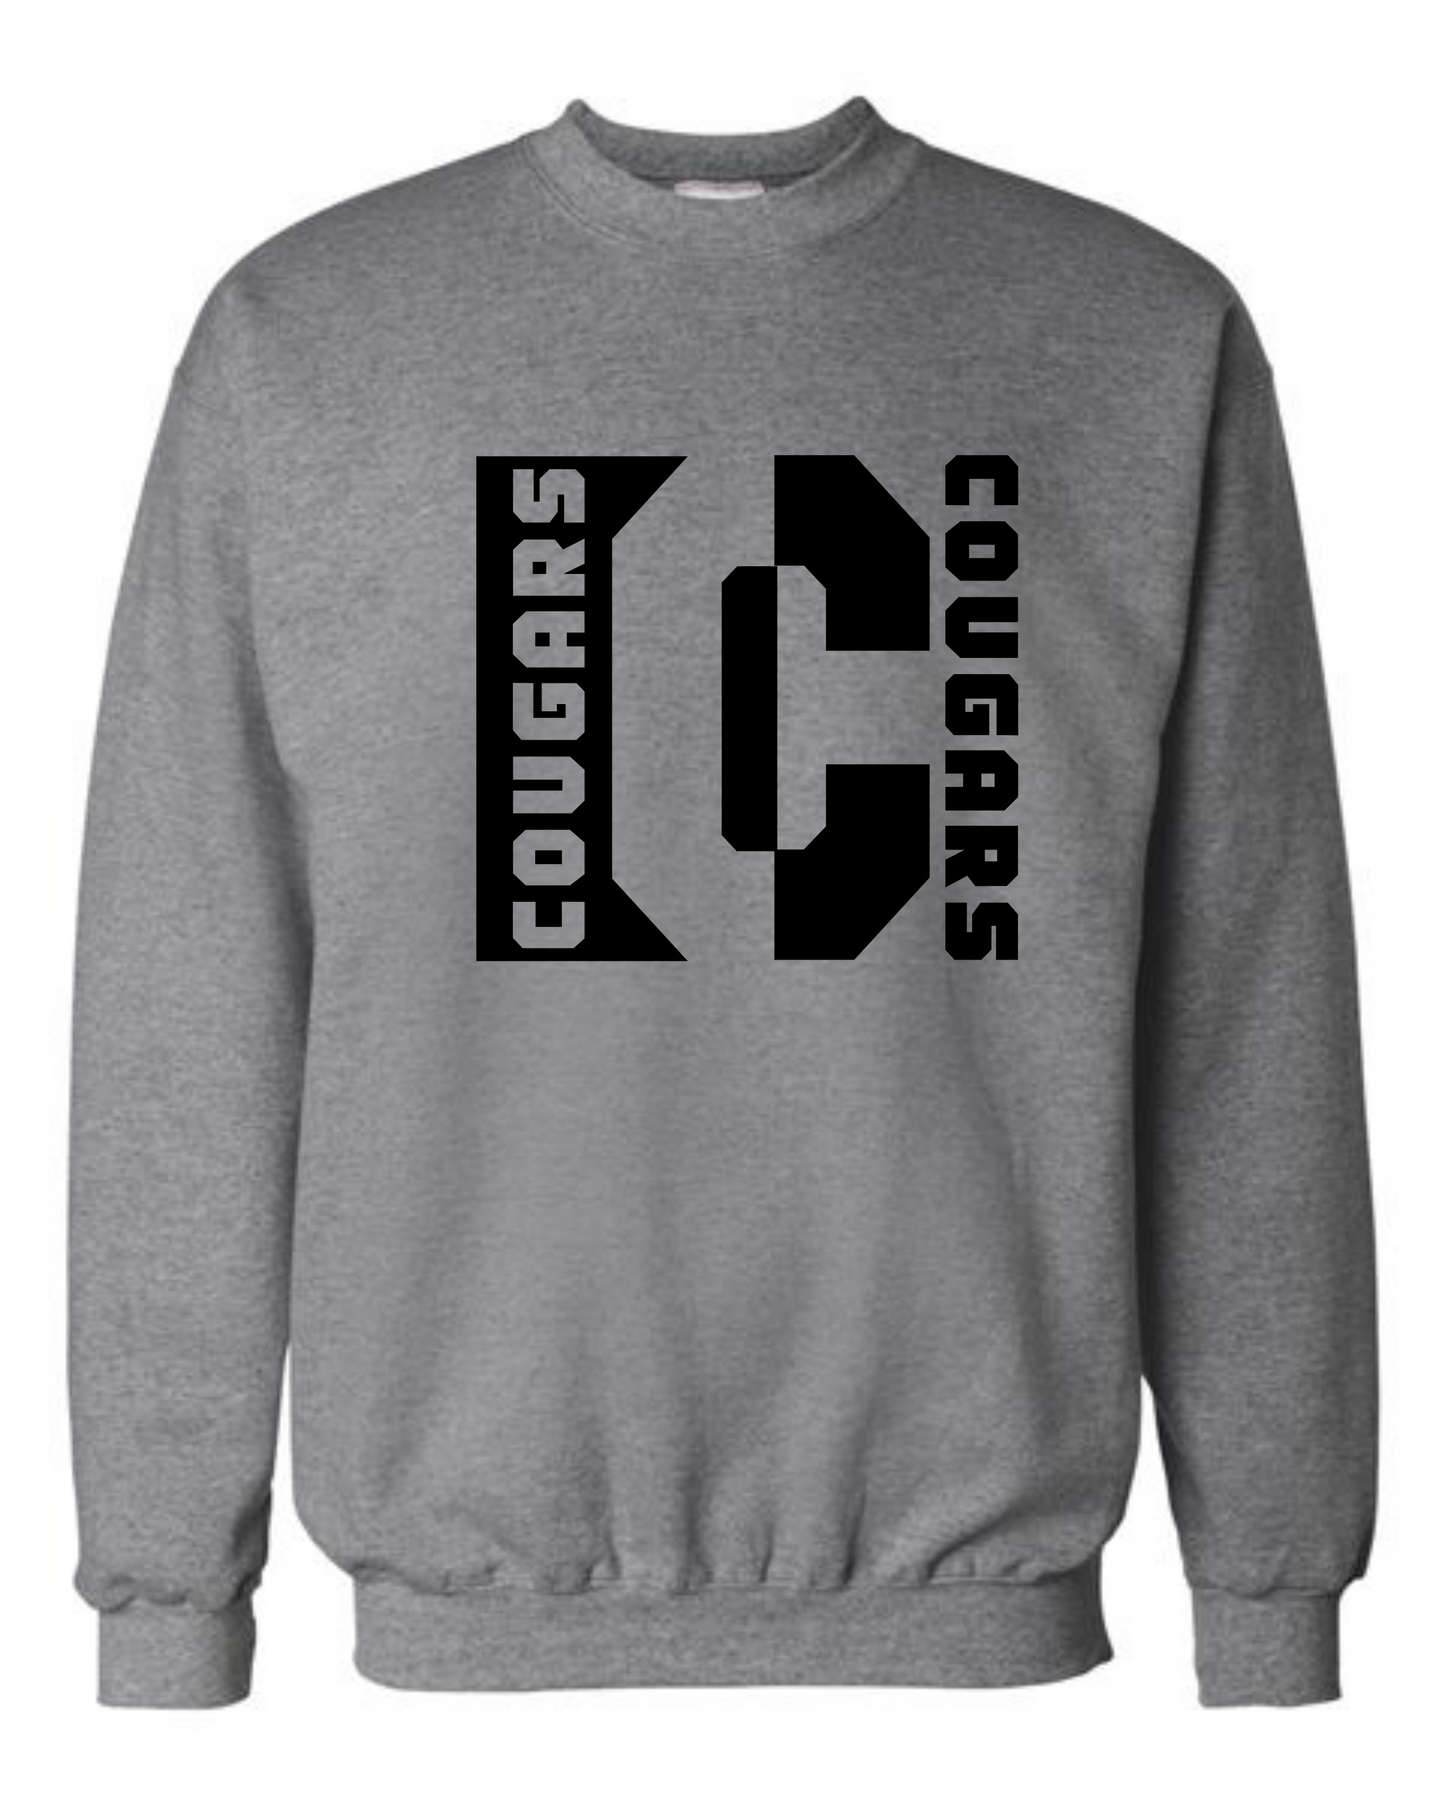 Cougars Colorblock Sweatshirt